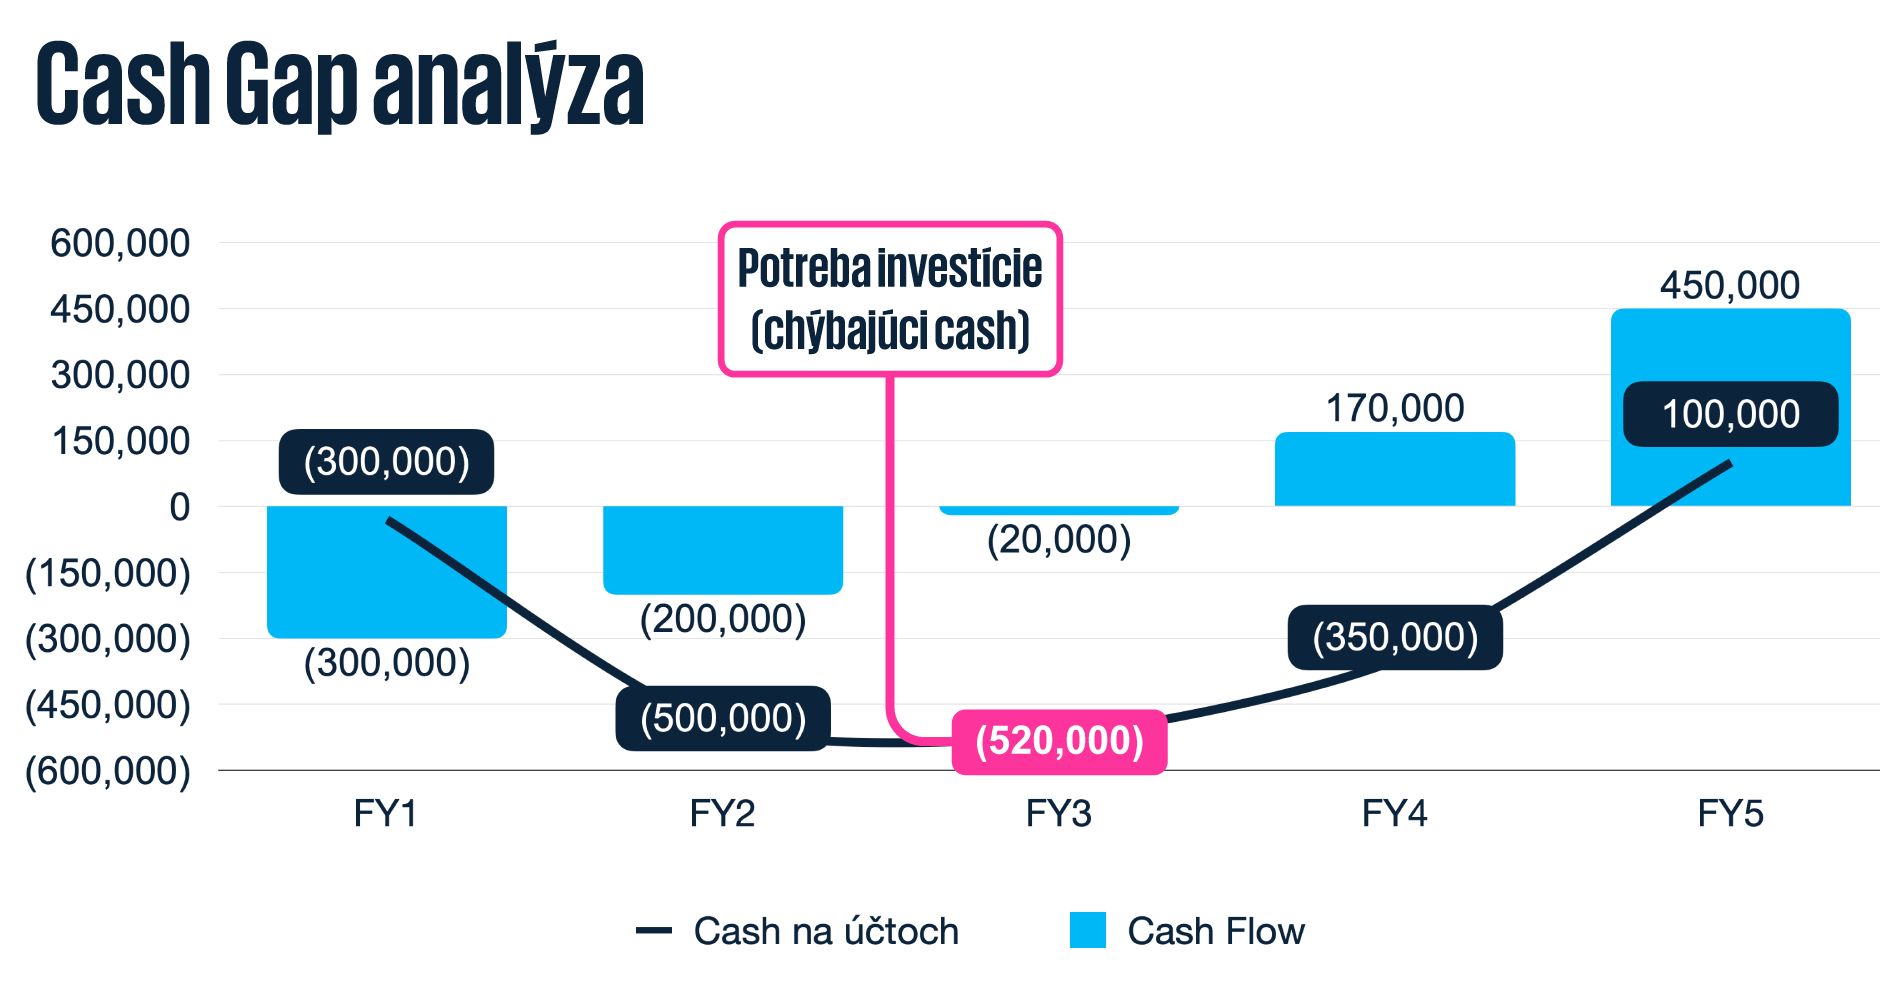 cash-gap analyza